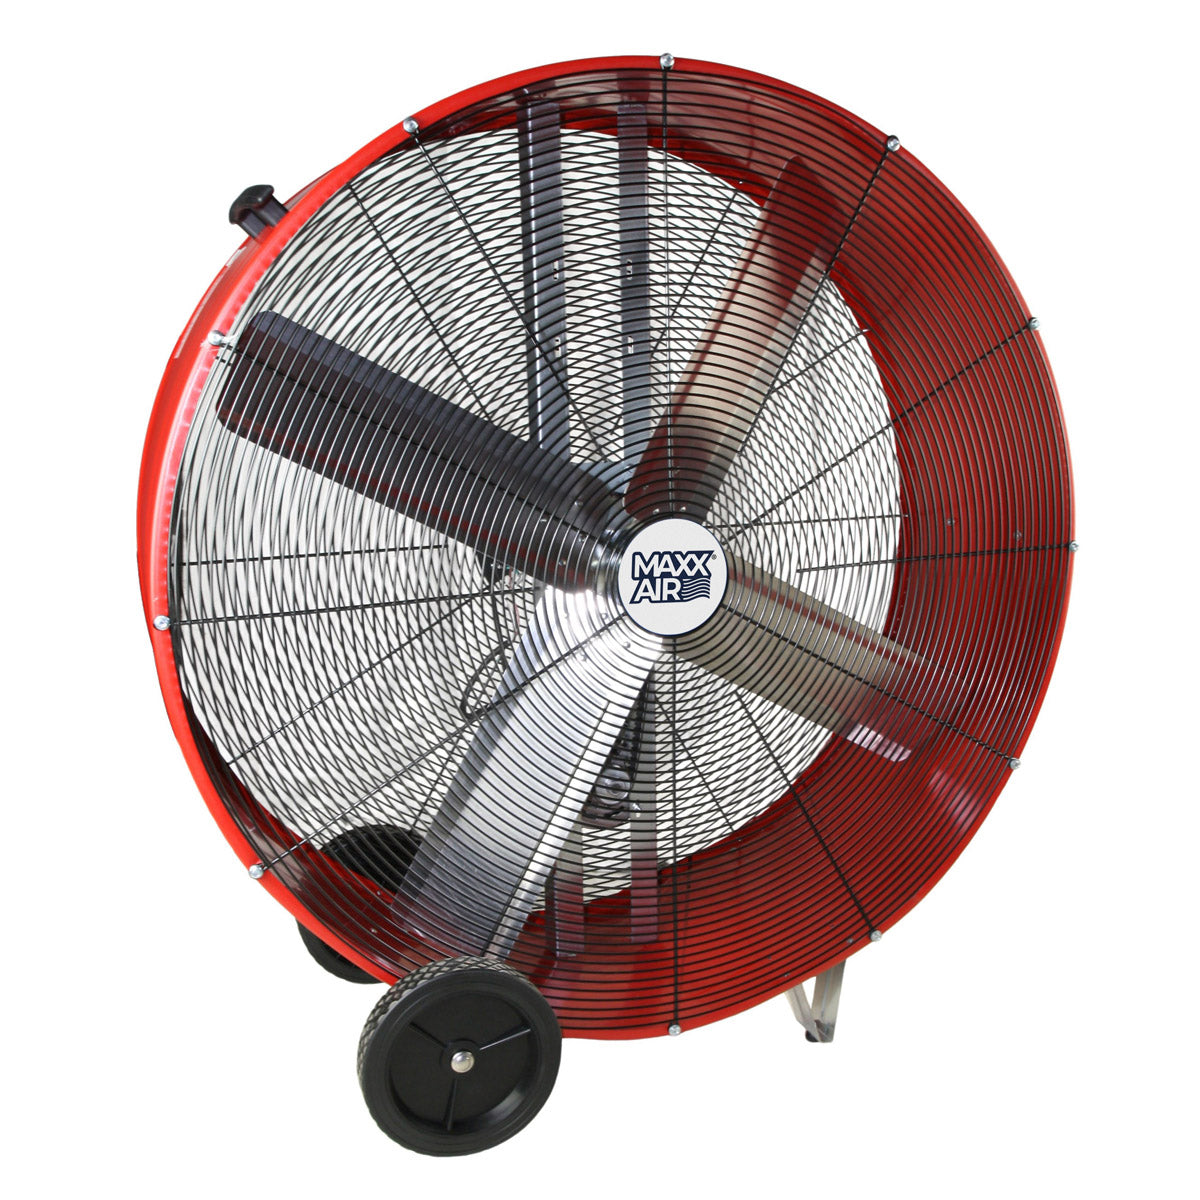 Maxx Air 42 In. 2-Speed Belt Drive Drum Fan (Red)